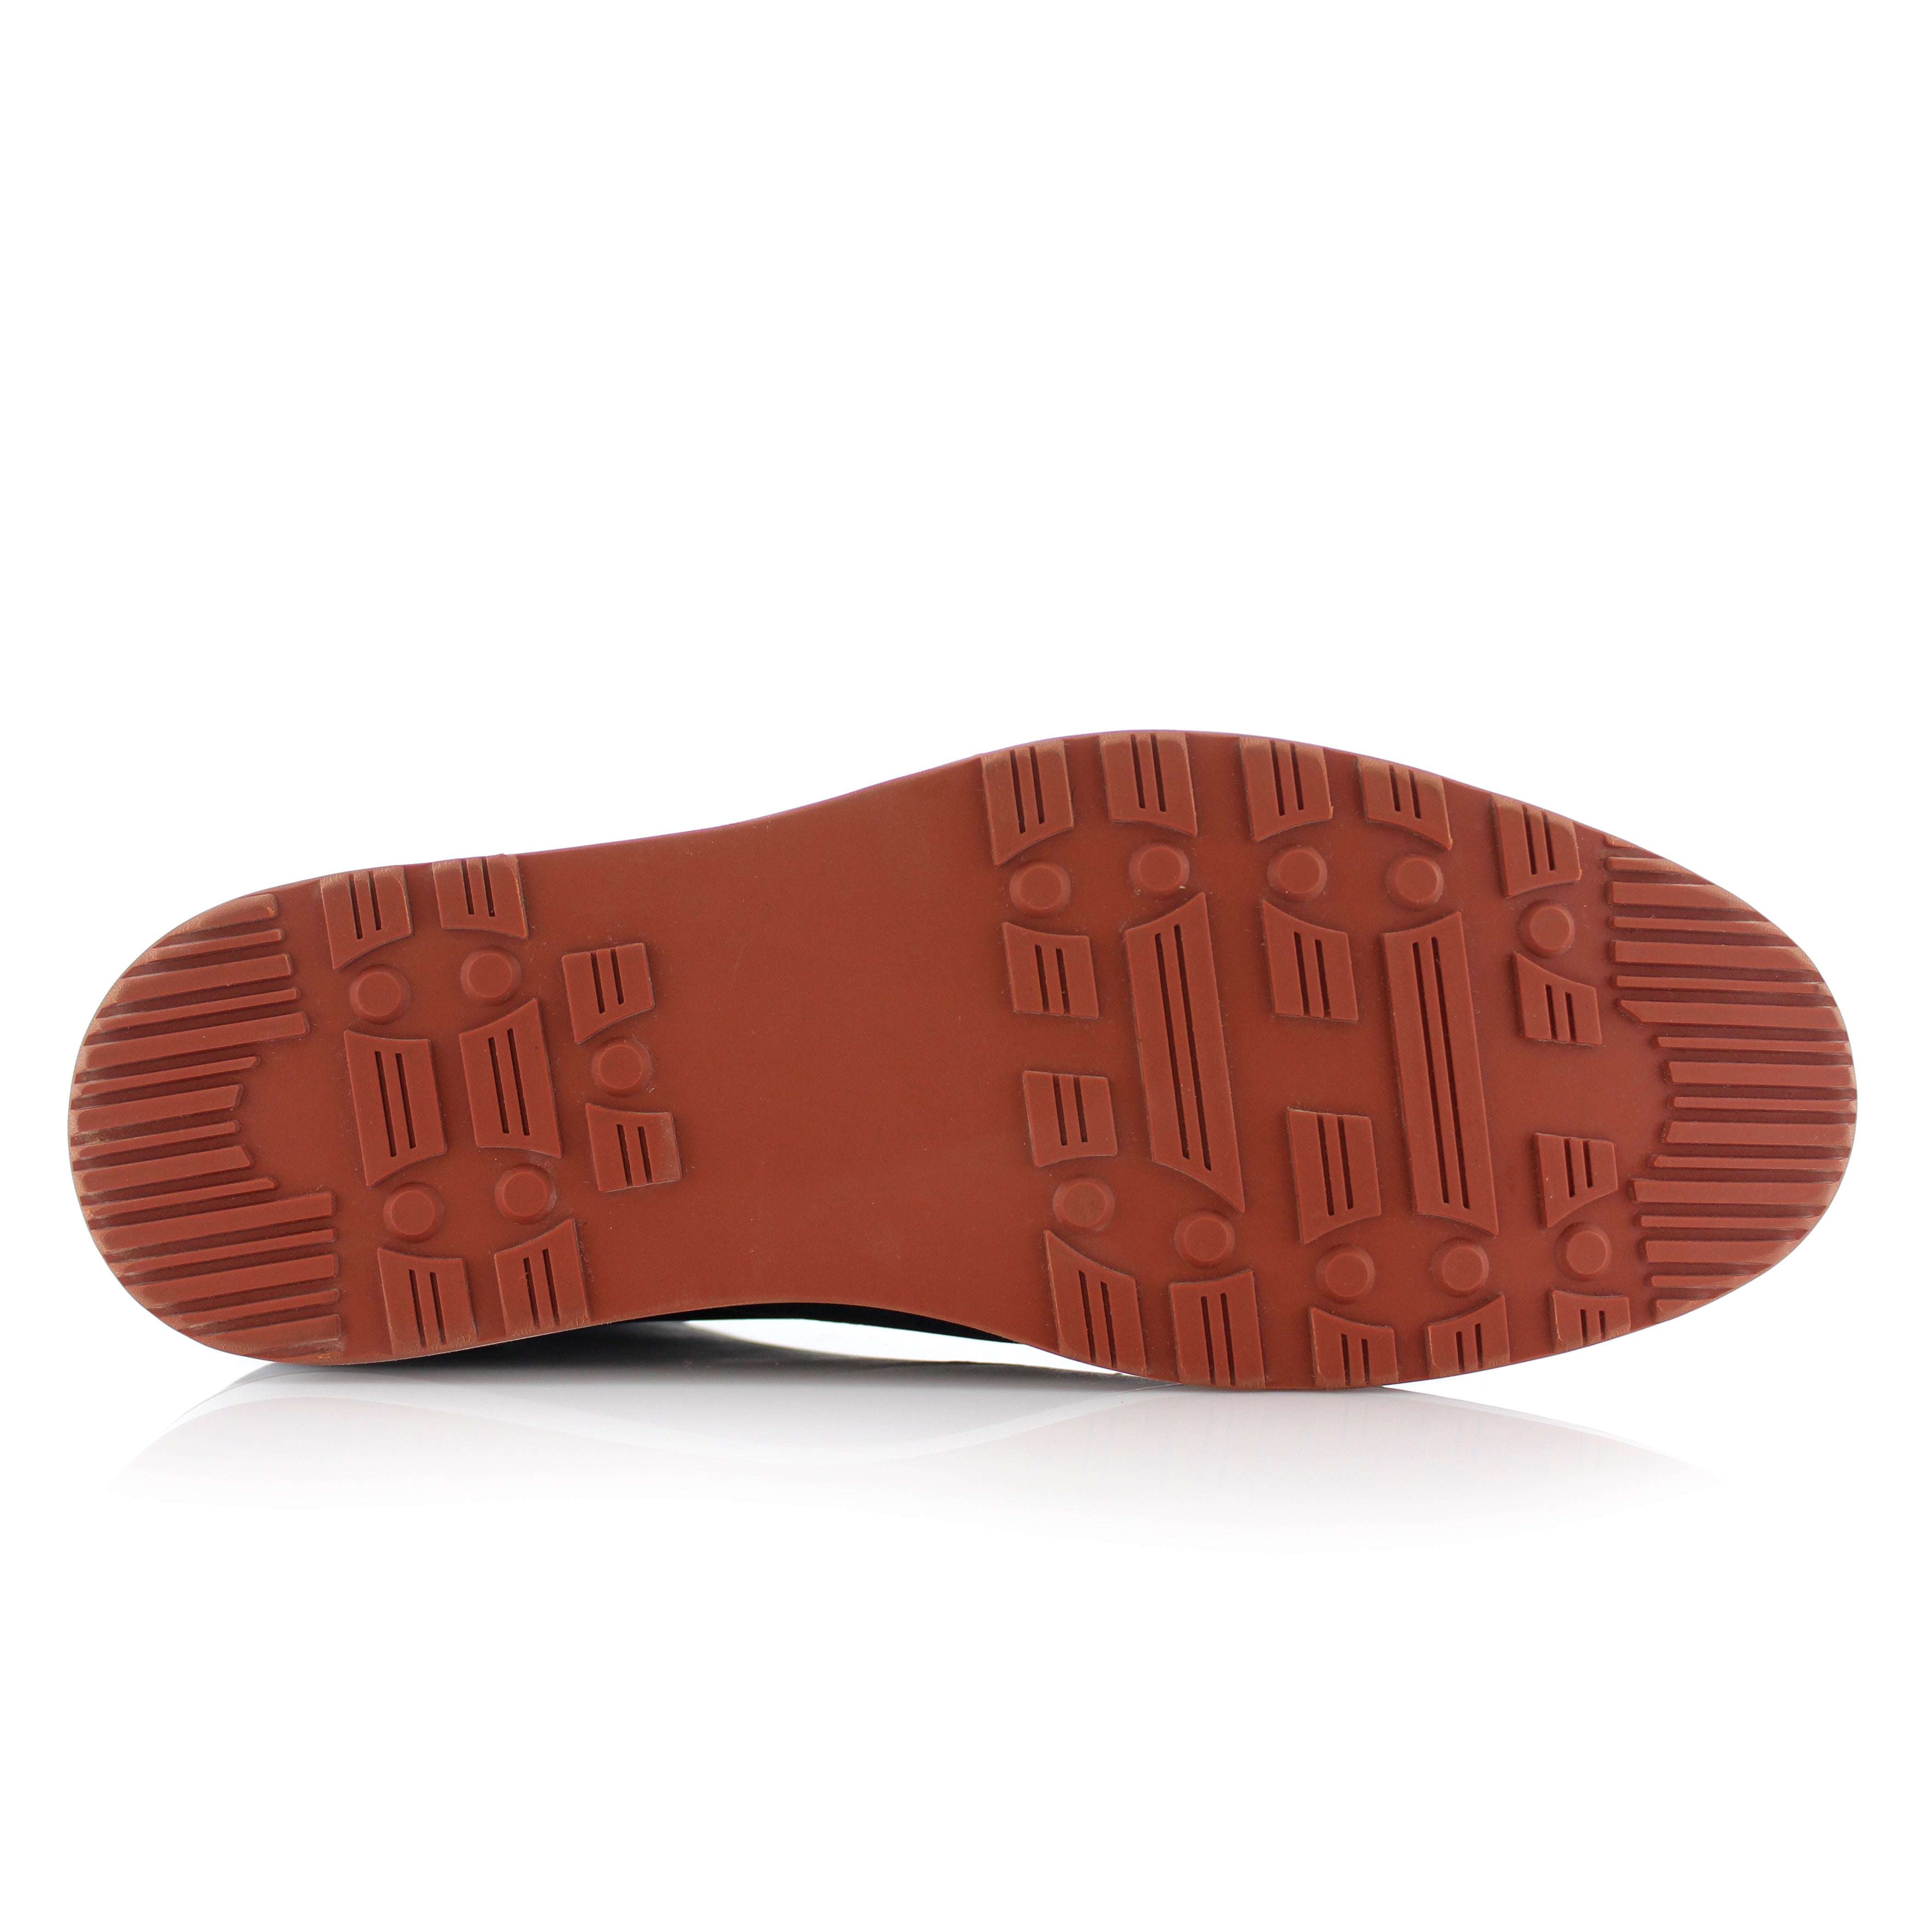 Cap-Toe Ankle Boot Sneakers | Birt by Ferro Aldo | Conal Footwear | Bottom Sole Angle View